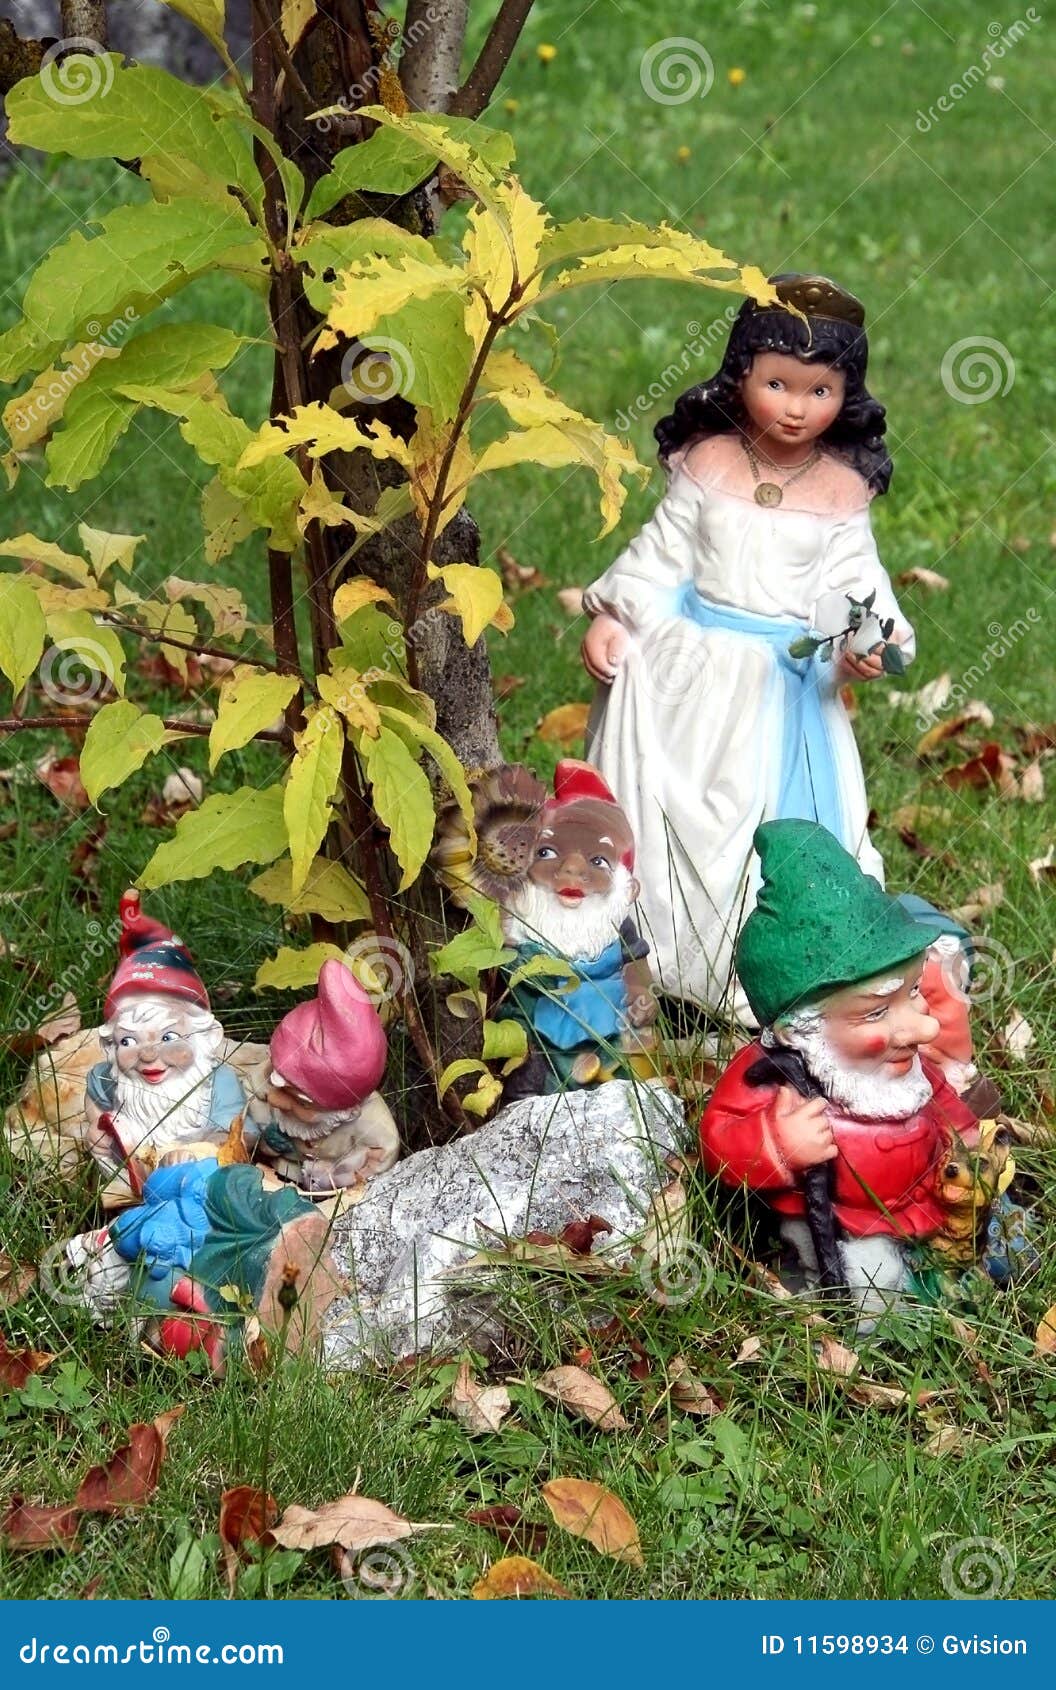 snow white and seven dwarfs